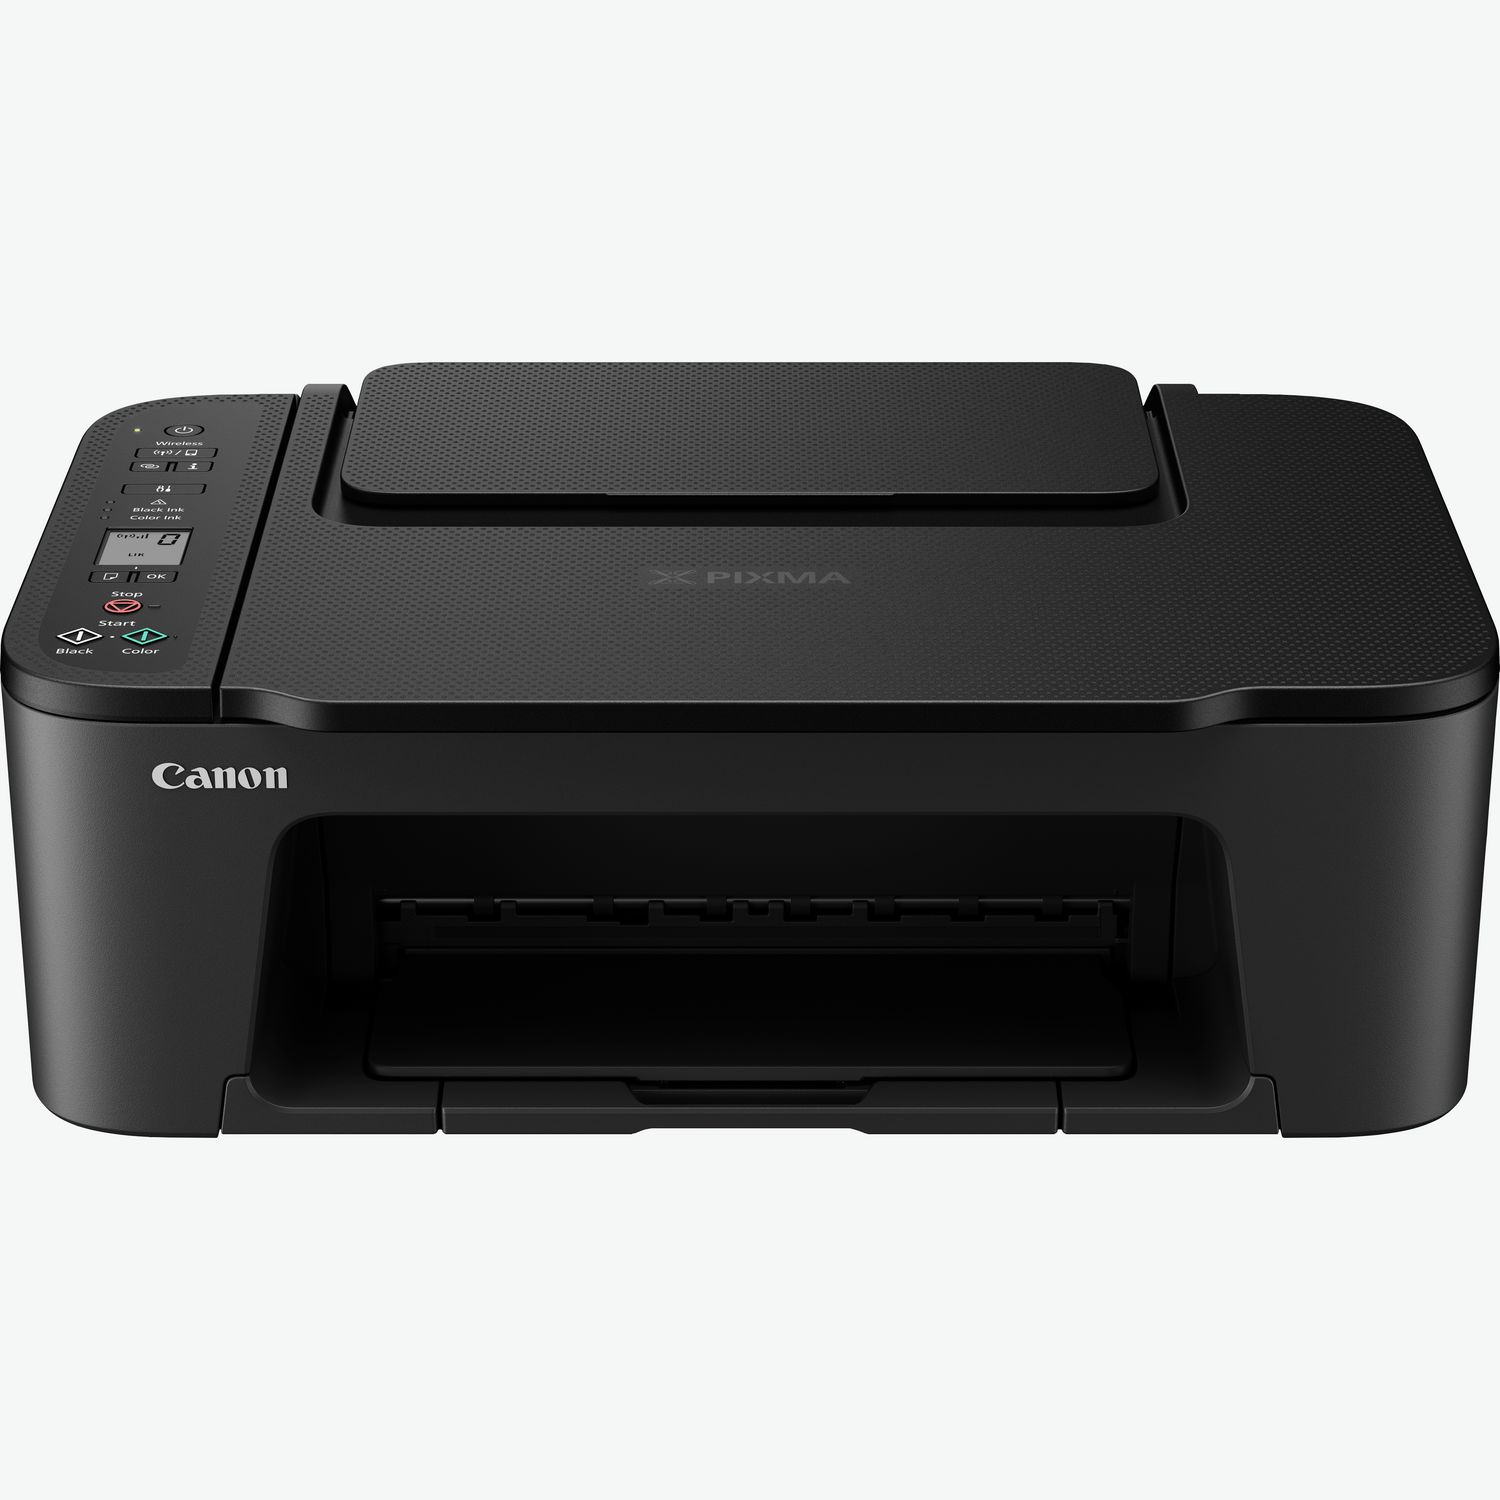 Canon PIXMA TS705a, five-ink printer for less than 100 euros - PC